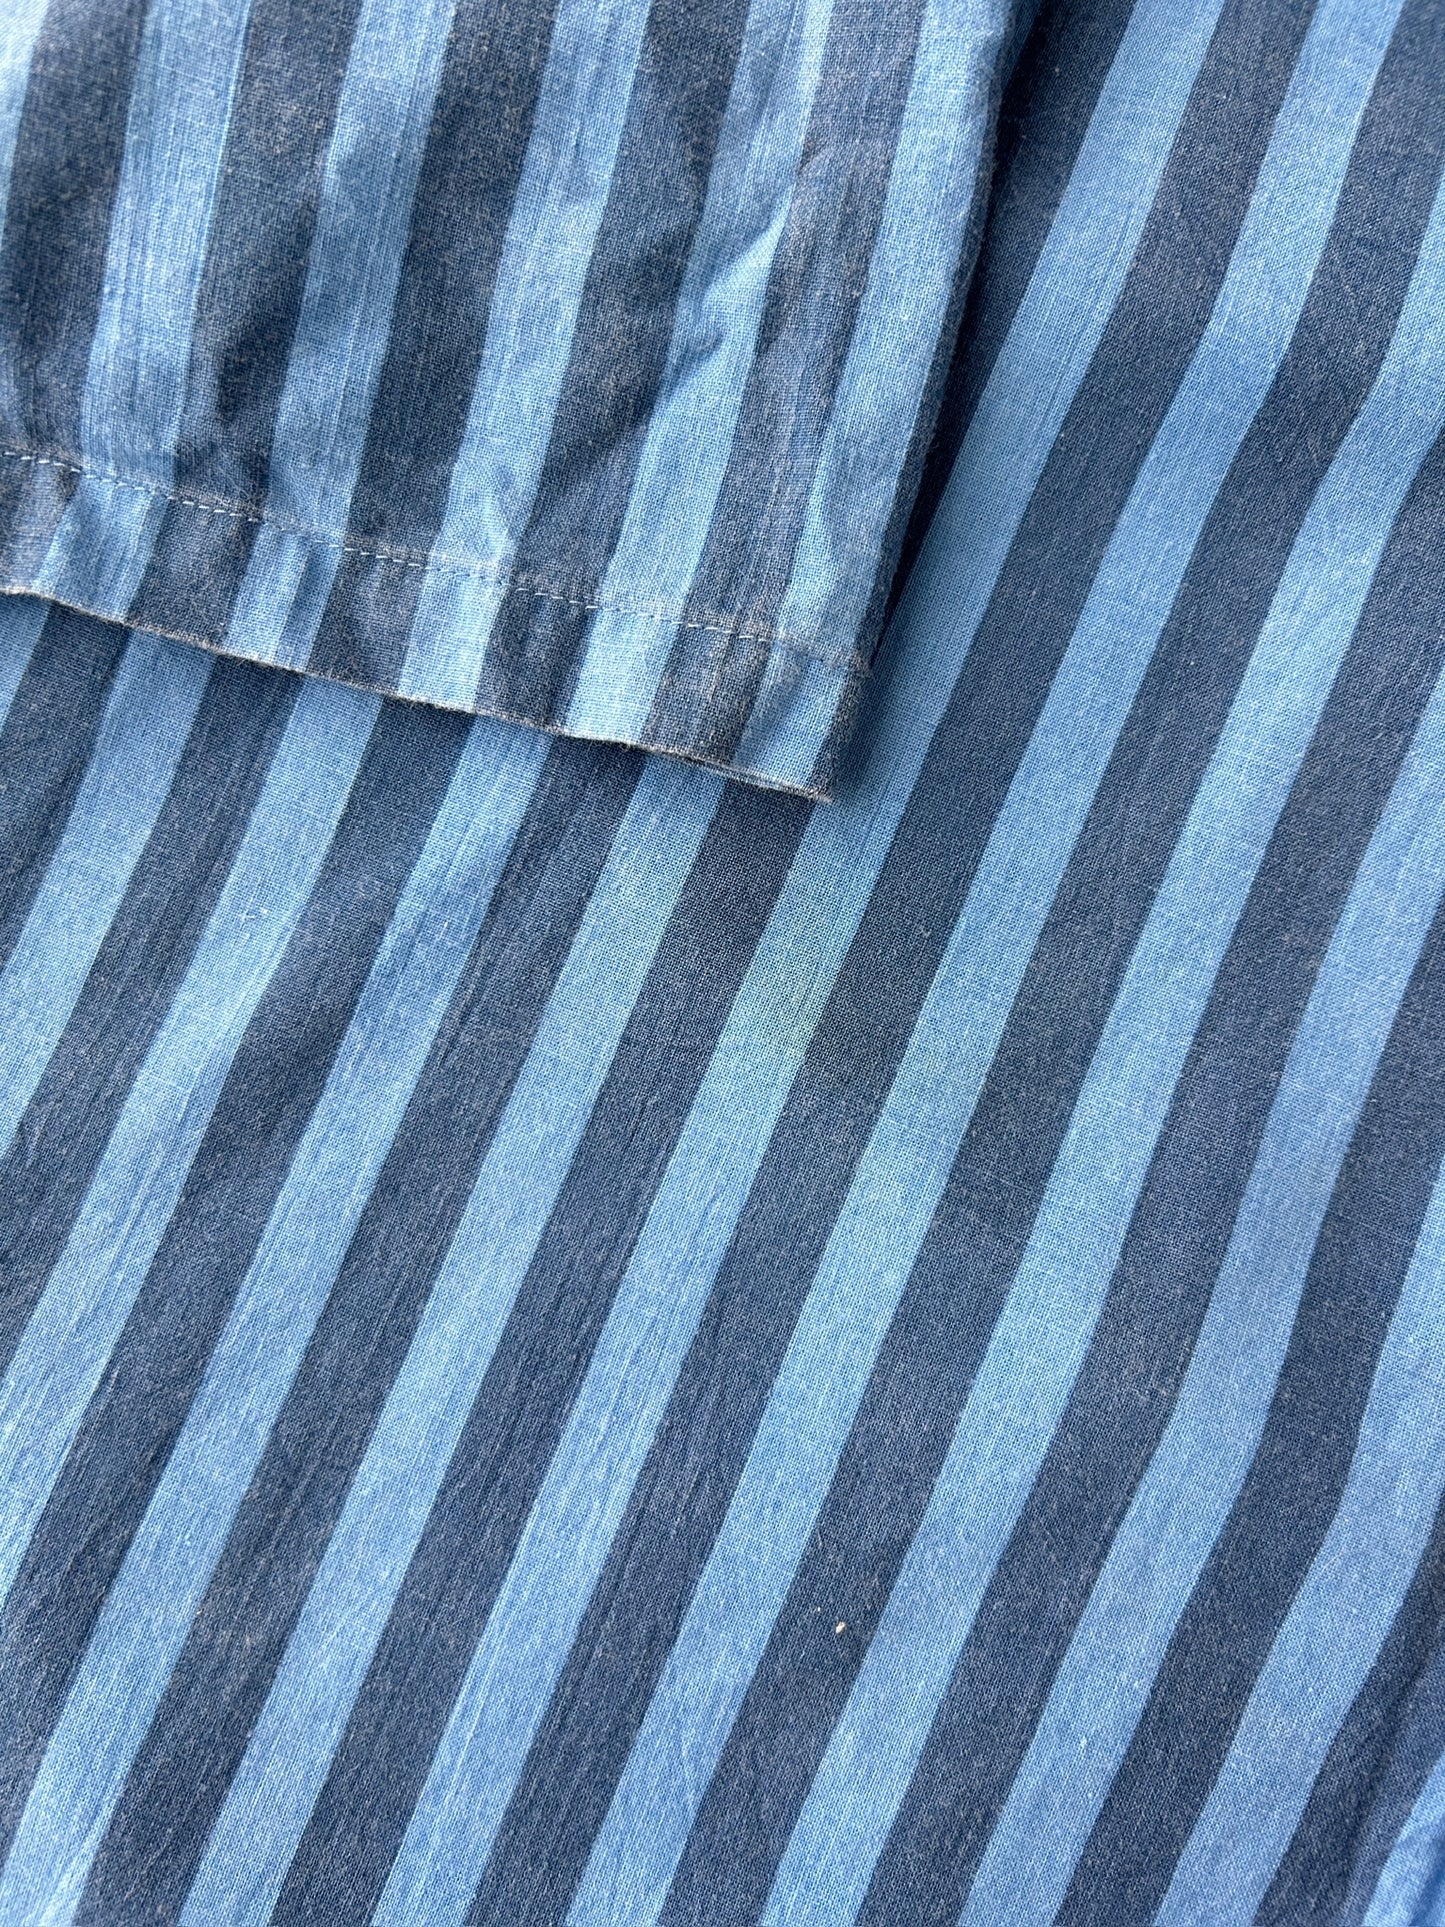 Blue Striped Shirt Y2K - Large